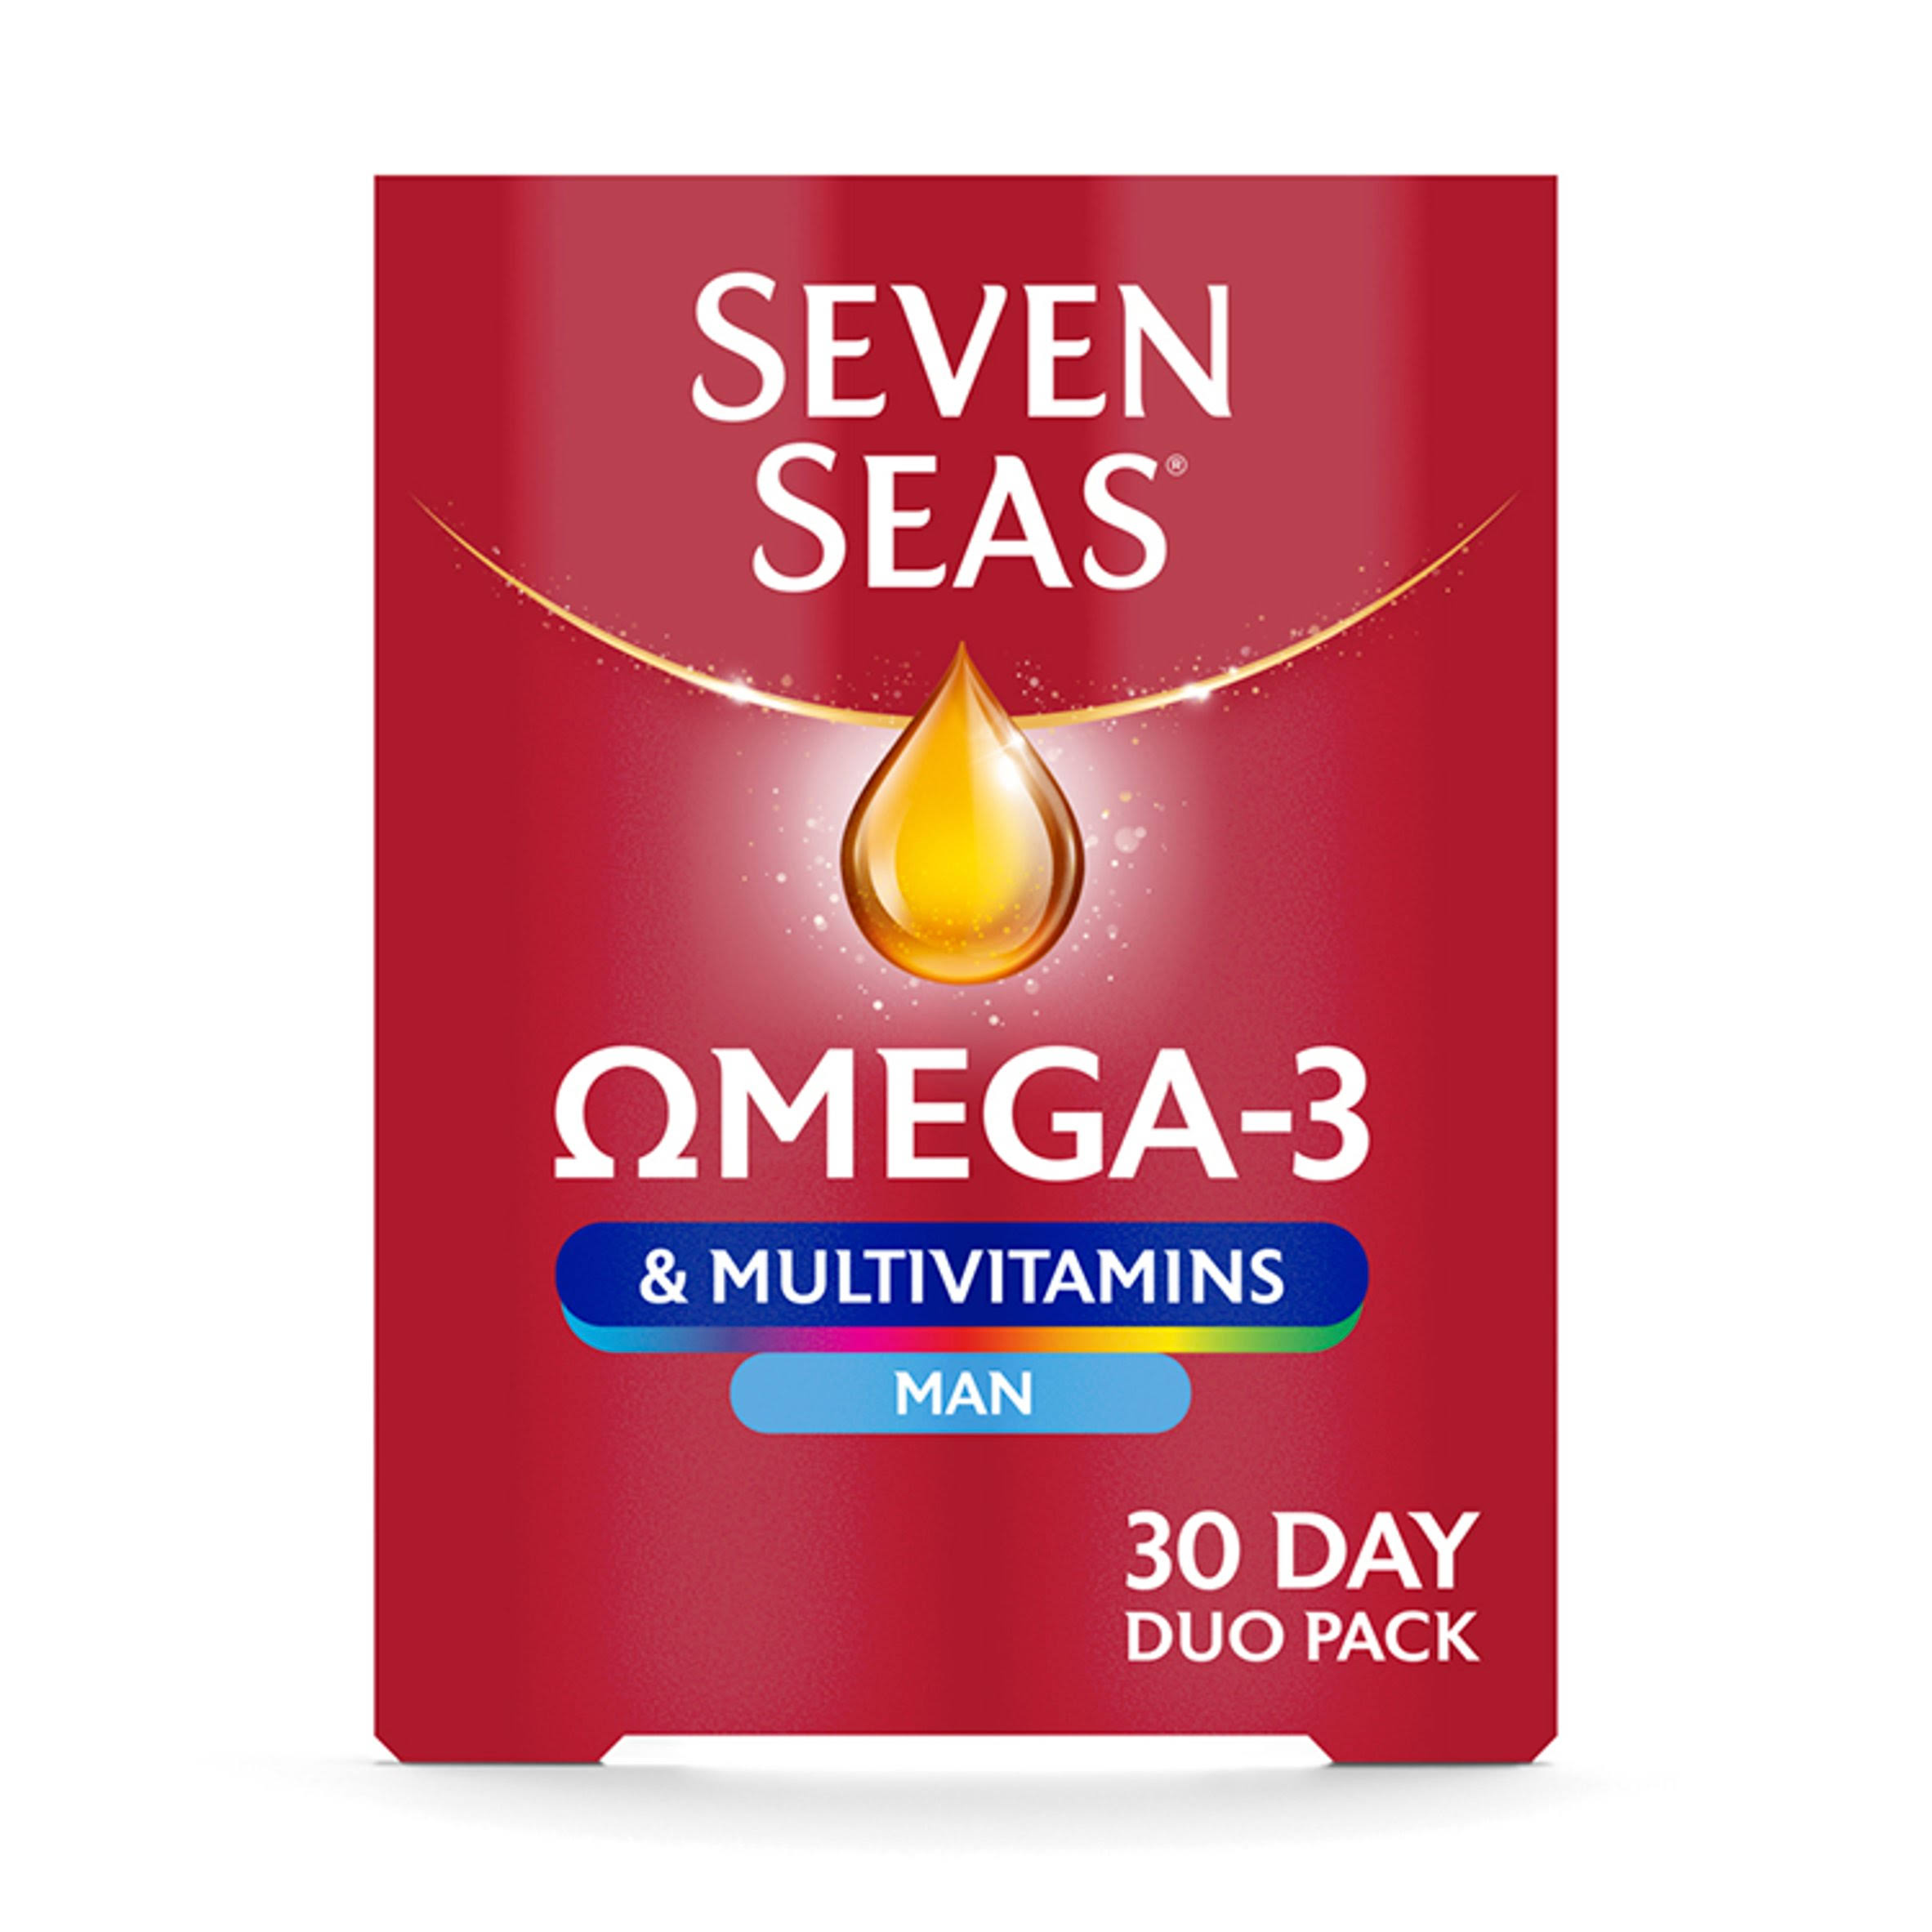 Seven Seas Omega 3 & Multivitamins Man Pack of 30 Duo